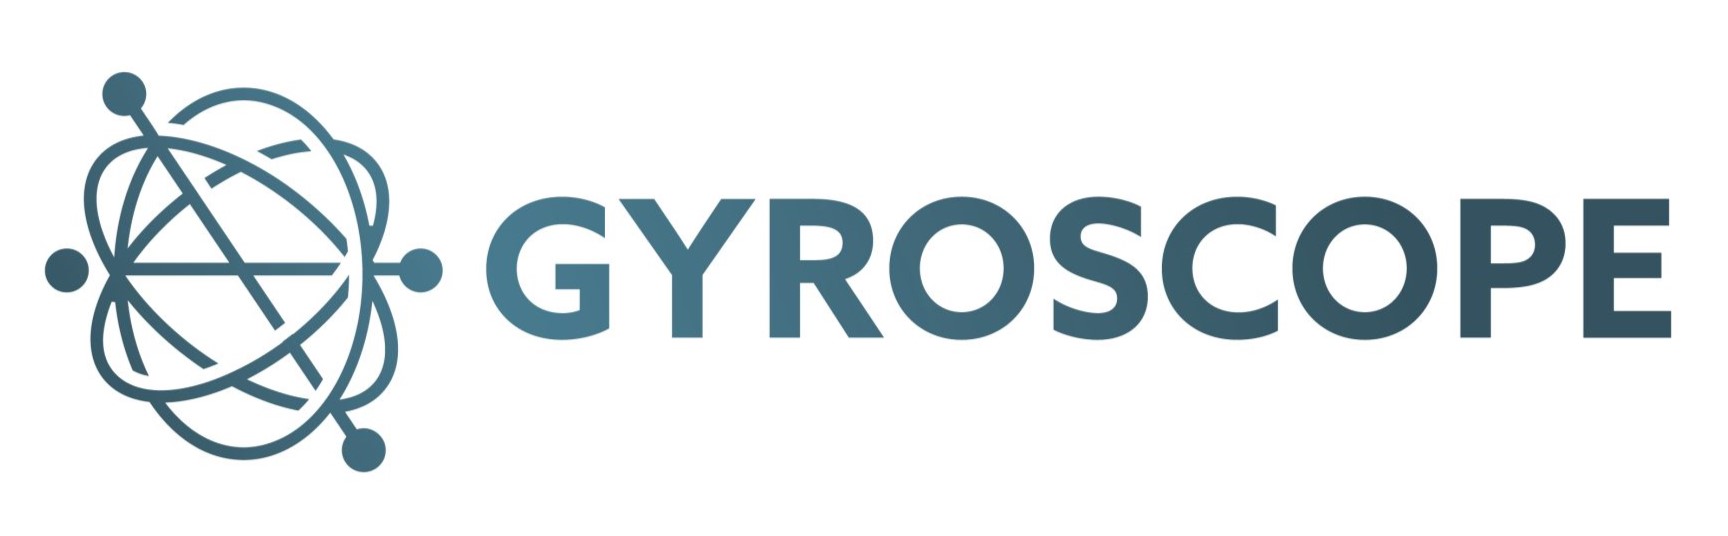 gyroscopee